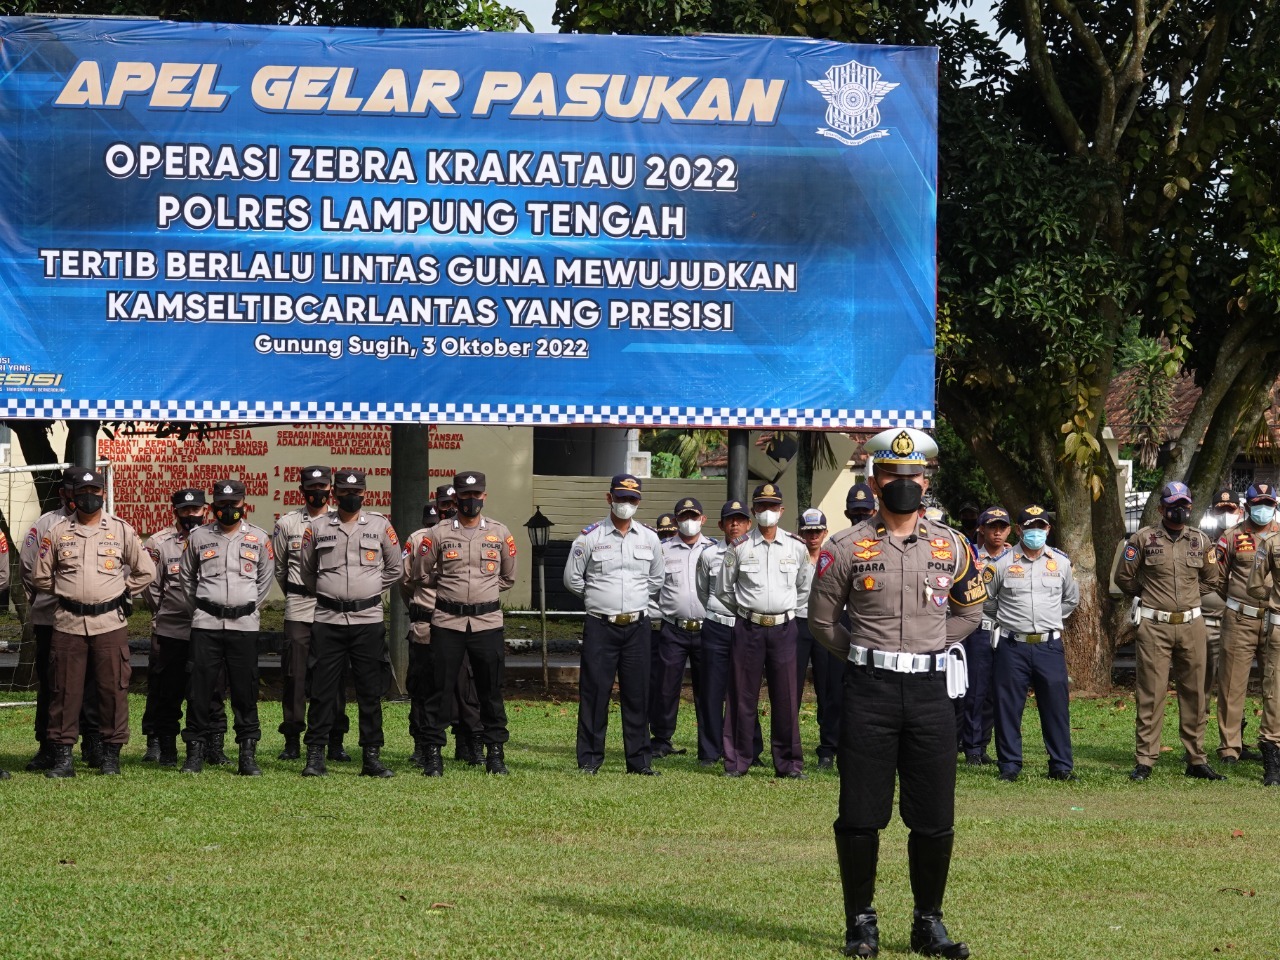 Kapolres Lampung Tengah AKBP Doffie Fahlevi Sanjaya,S.I.K.,M.Si Memimpin Apel Gelar Pasukan Dalam Rangka Operasi Zebra